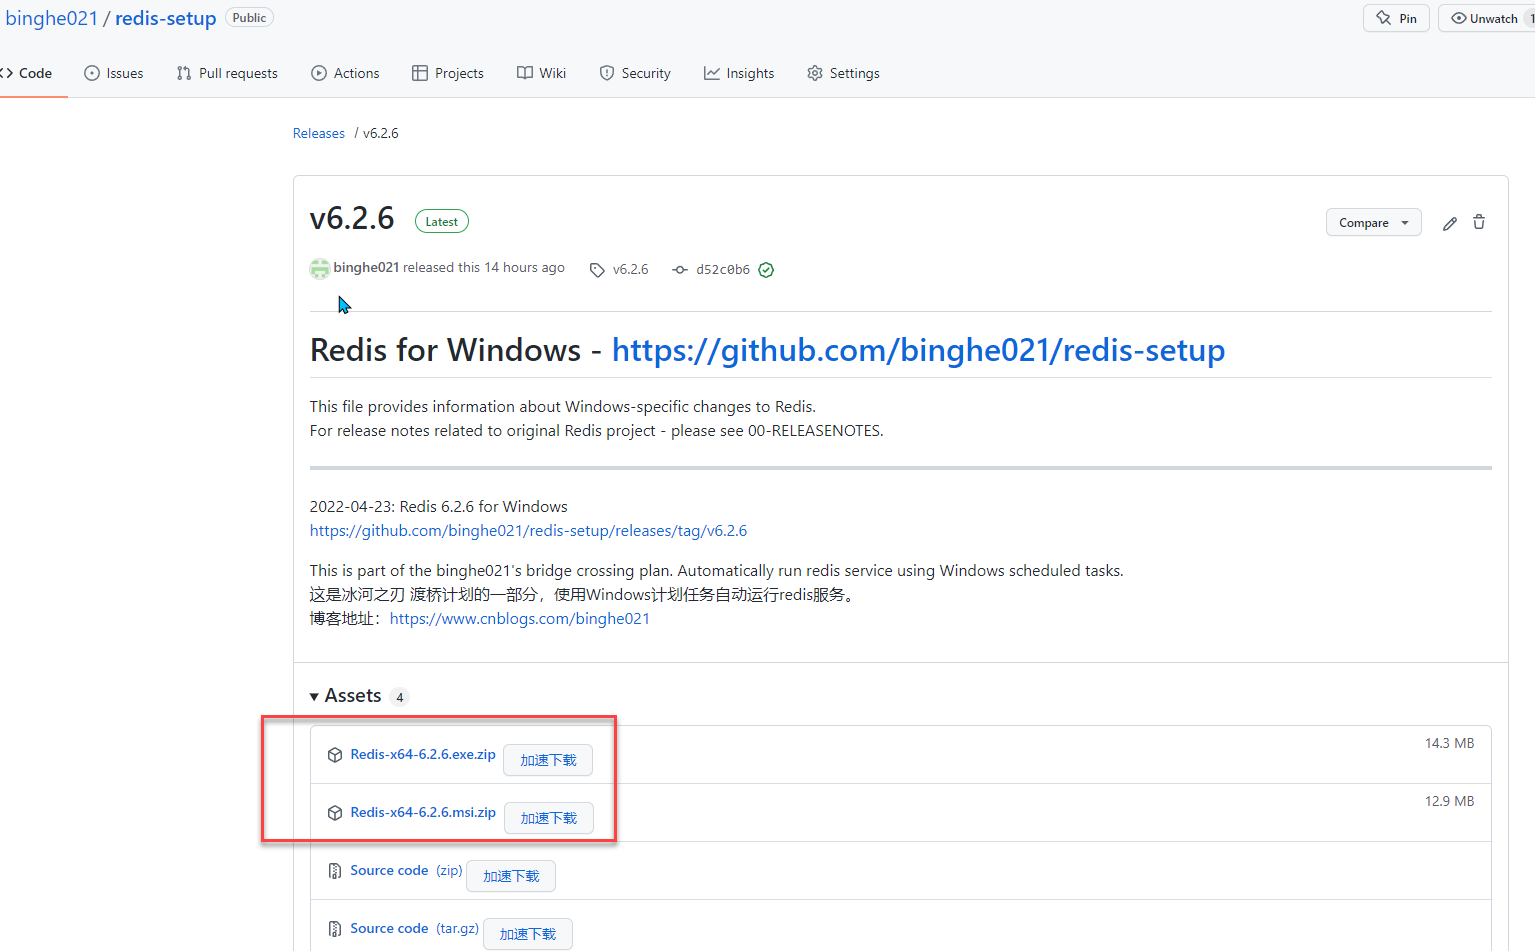 redis for windows 6.2.6安装包最新步骤详解